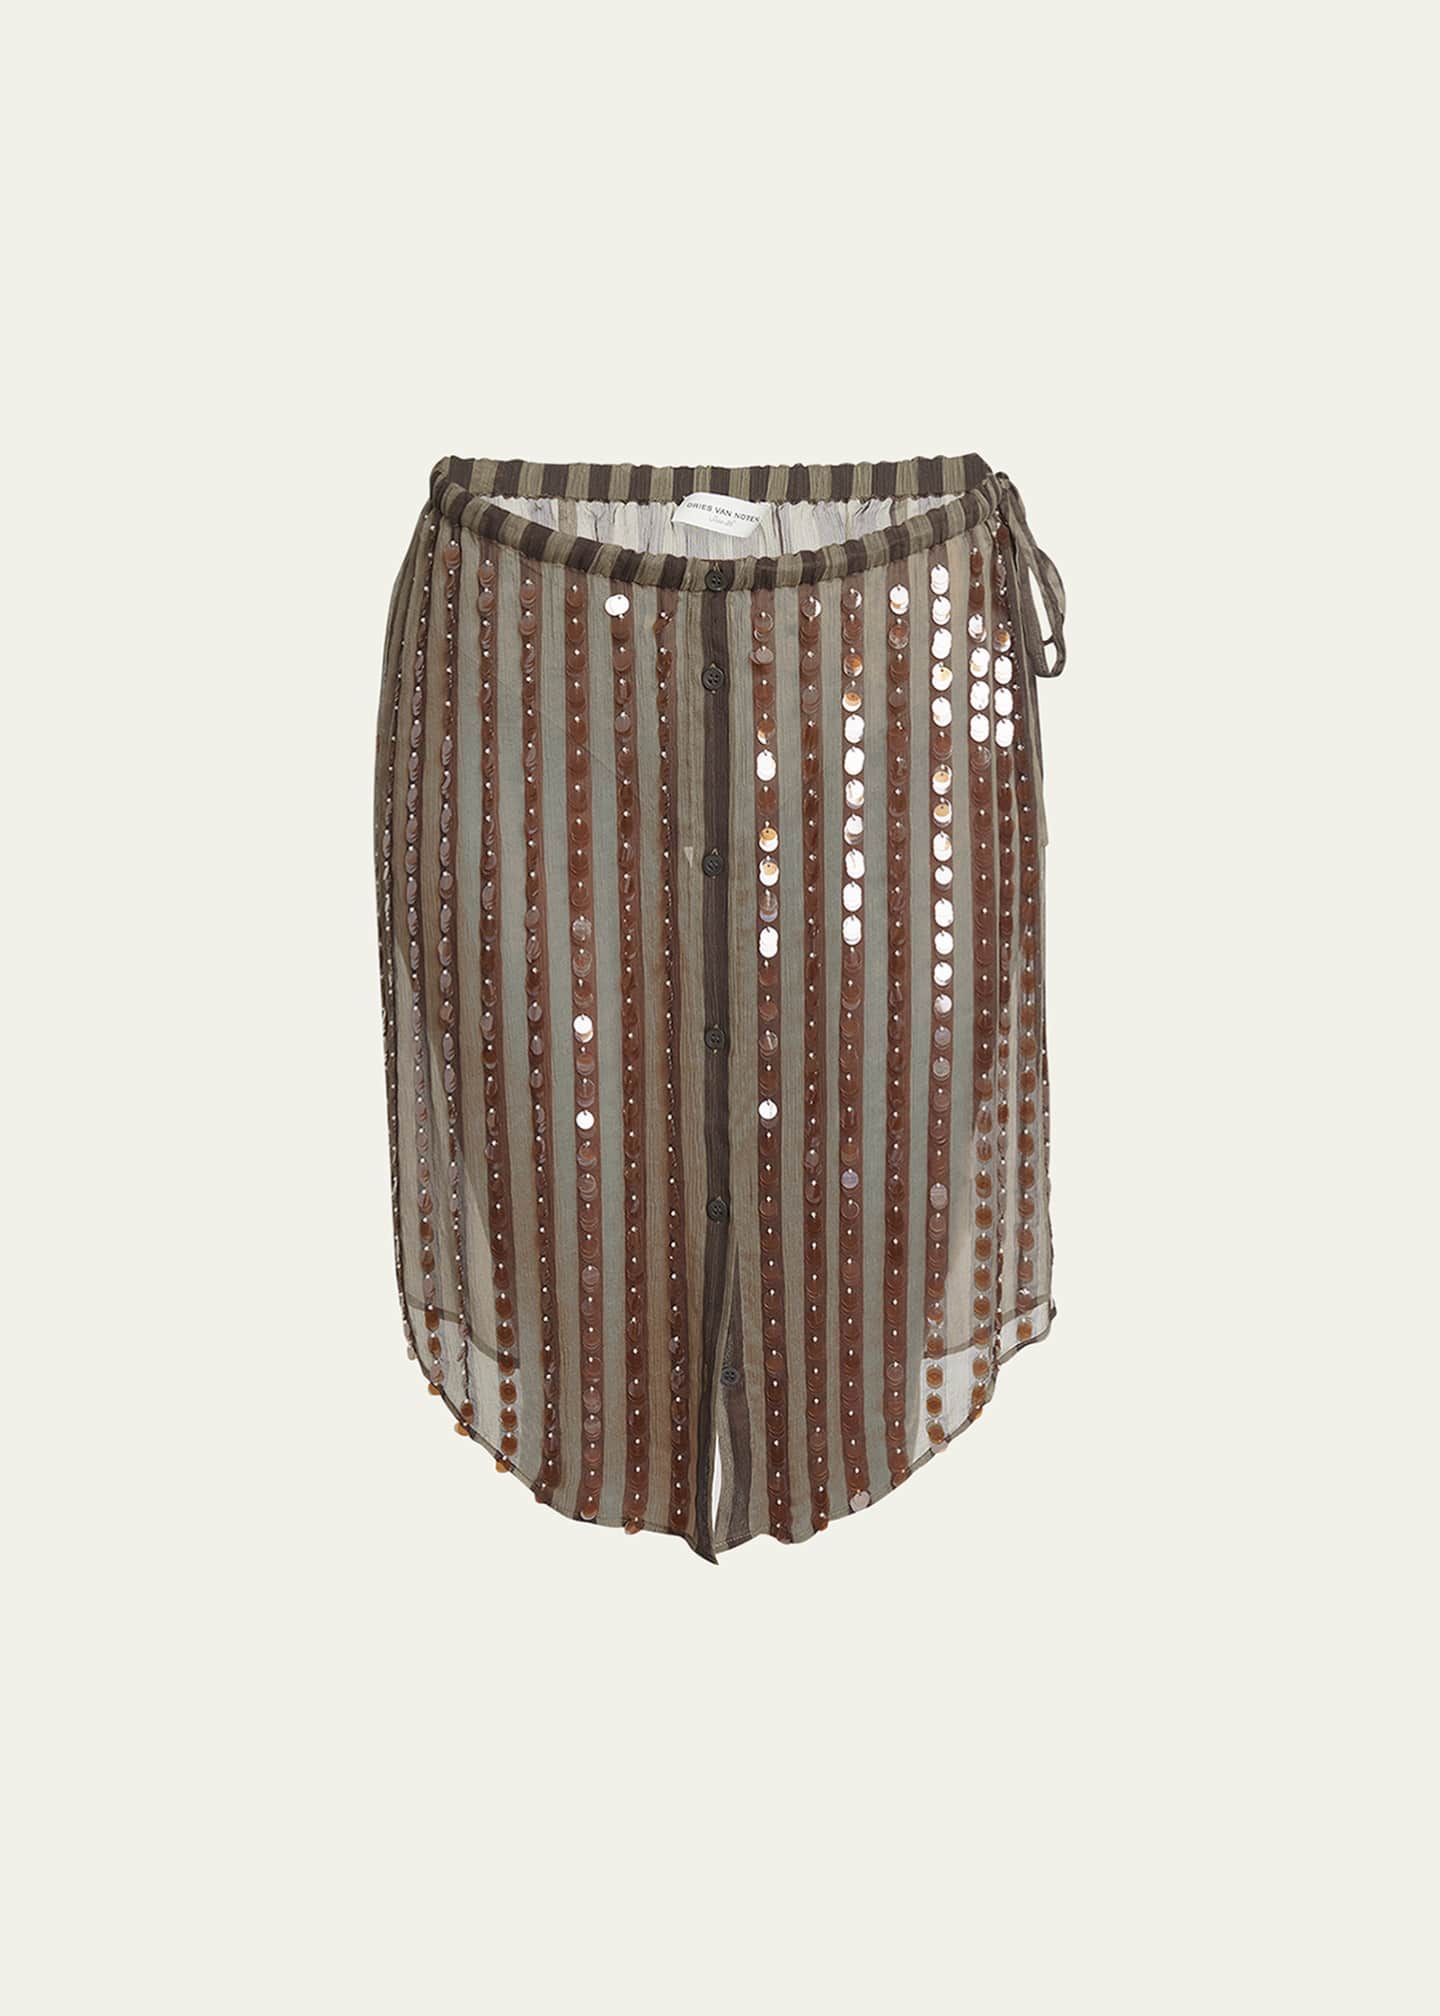 Dries Van Noten Shirty Embellished Sheer Midi Skirt - Bergdorf Goodman